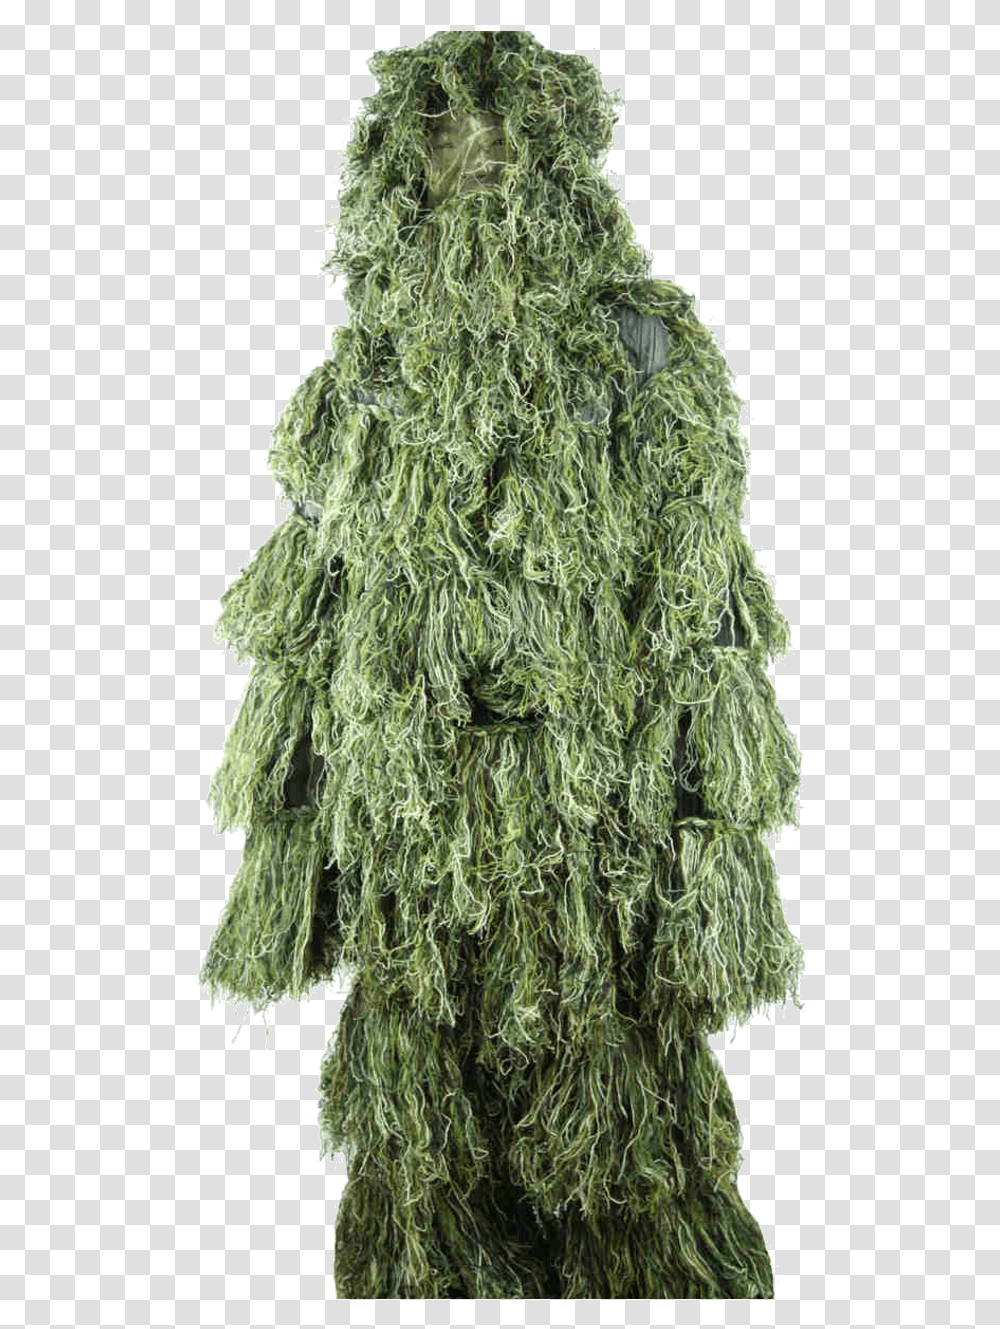 Sniper Costume, Moss, Plant, Potted Plant, Vase Transparent Png